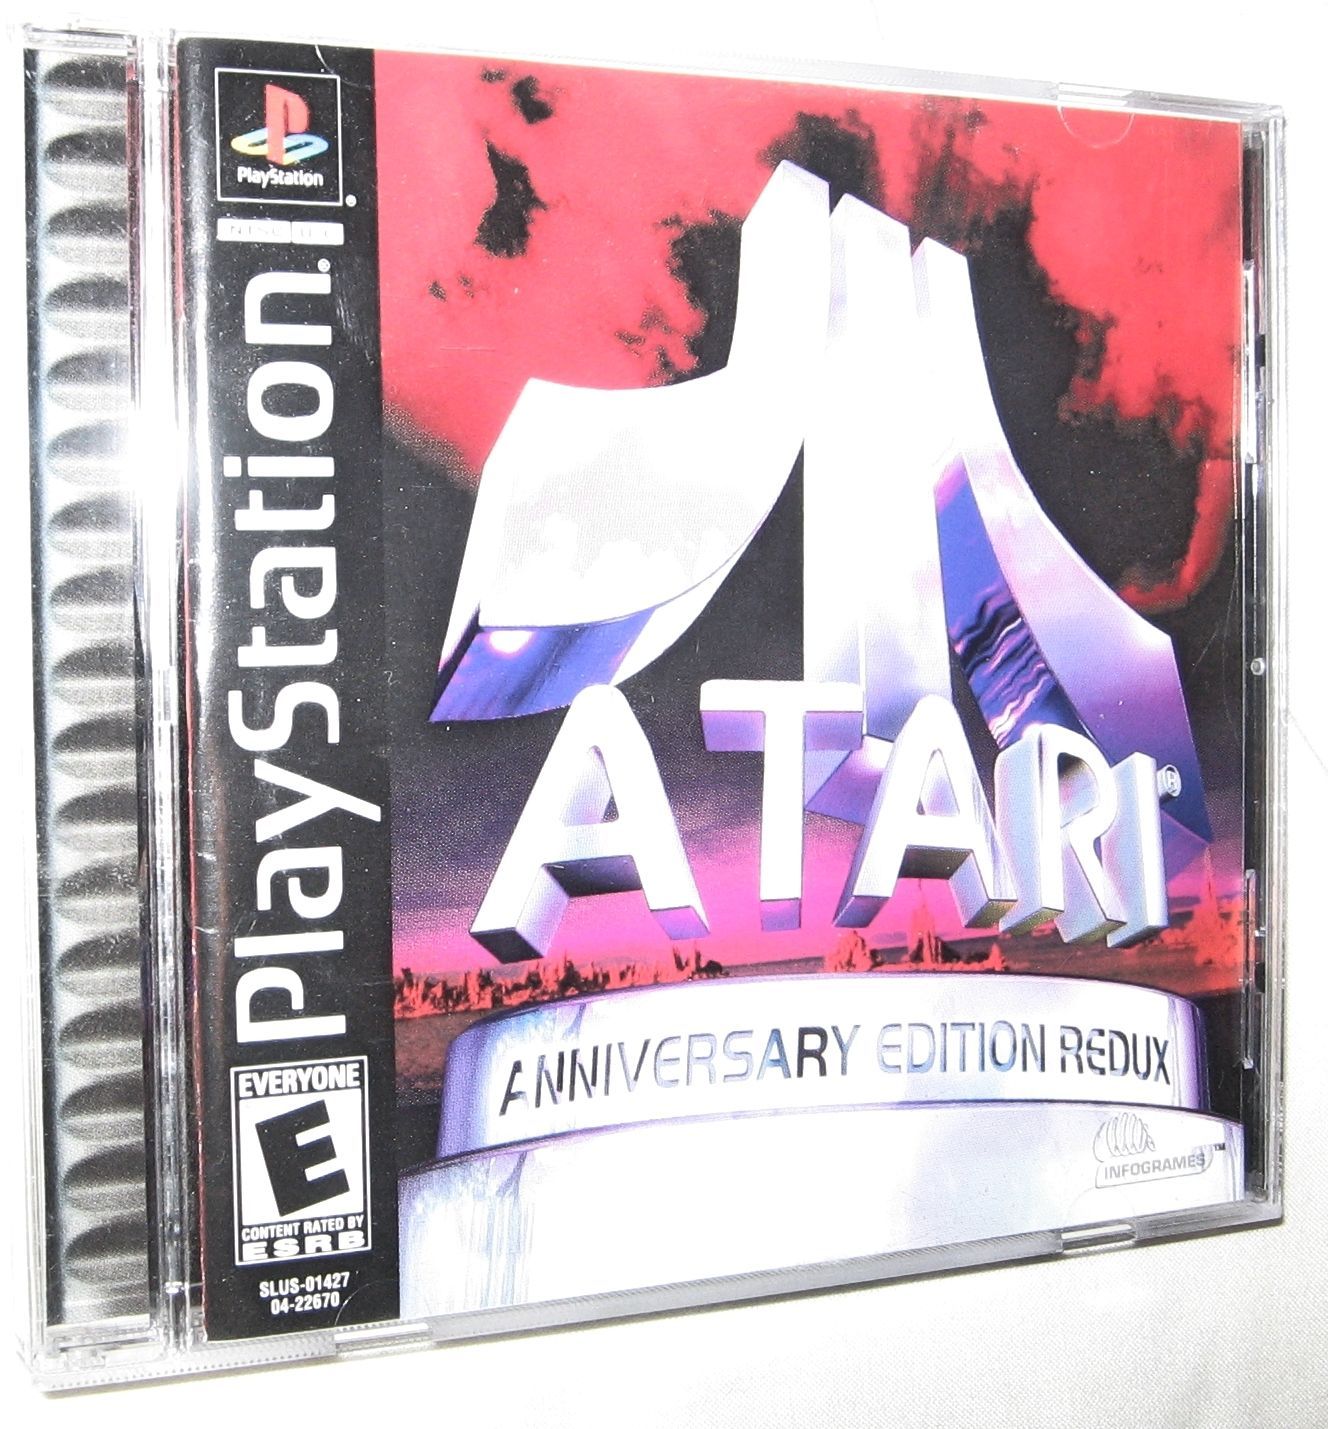 Atari Anniversary Edition Redux Sony PlayStation 1 2001 E Everyone Free Ship USA - $9.09